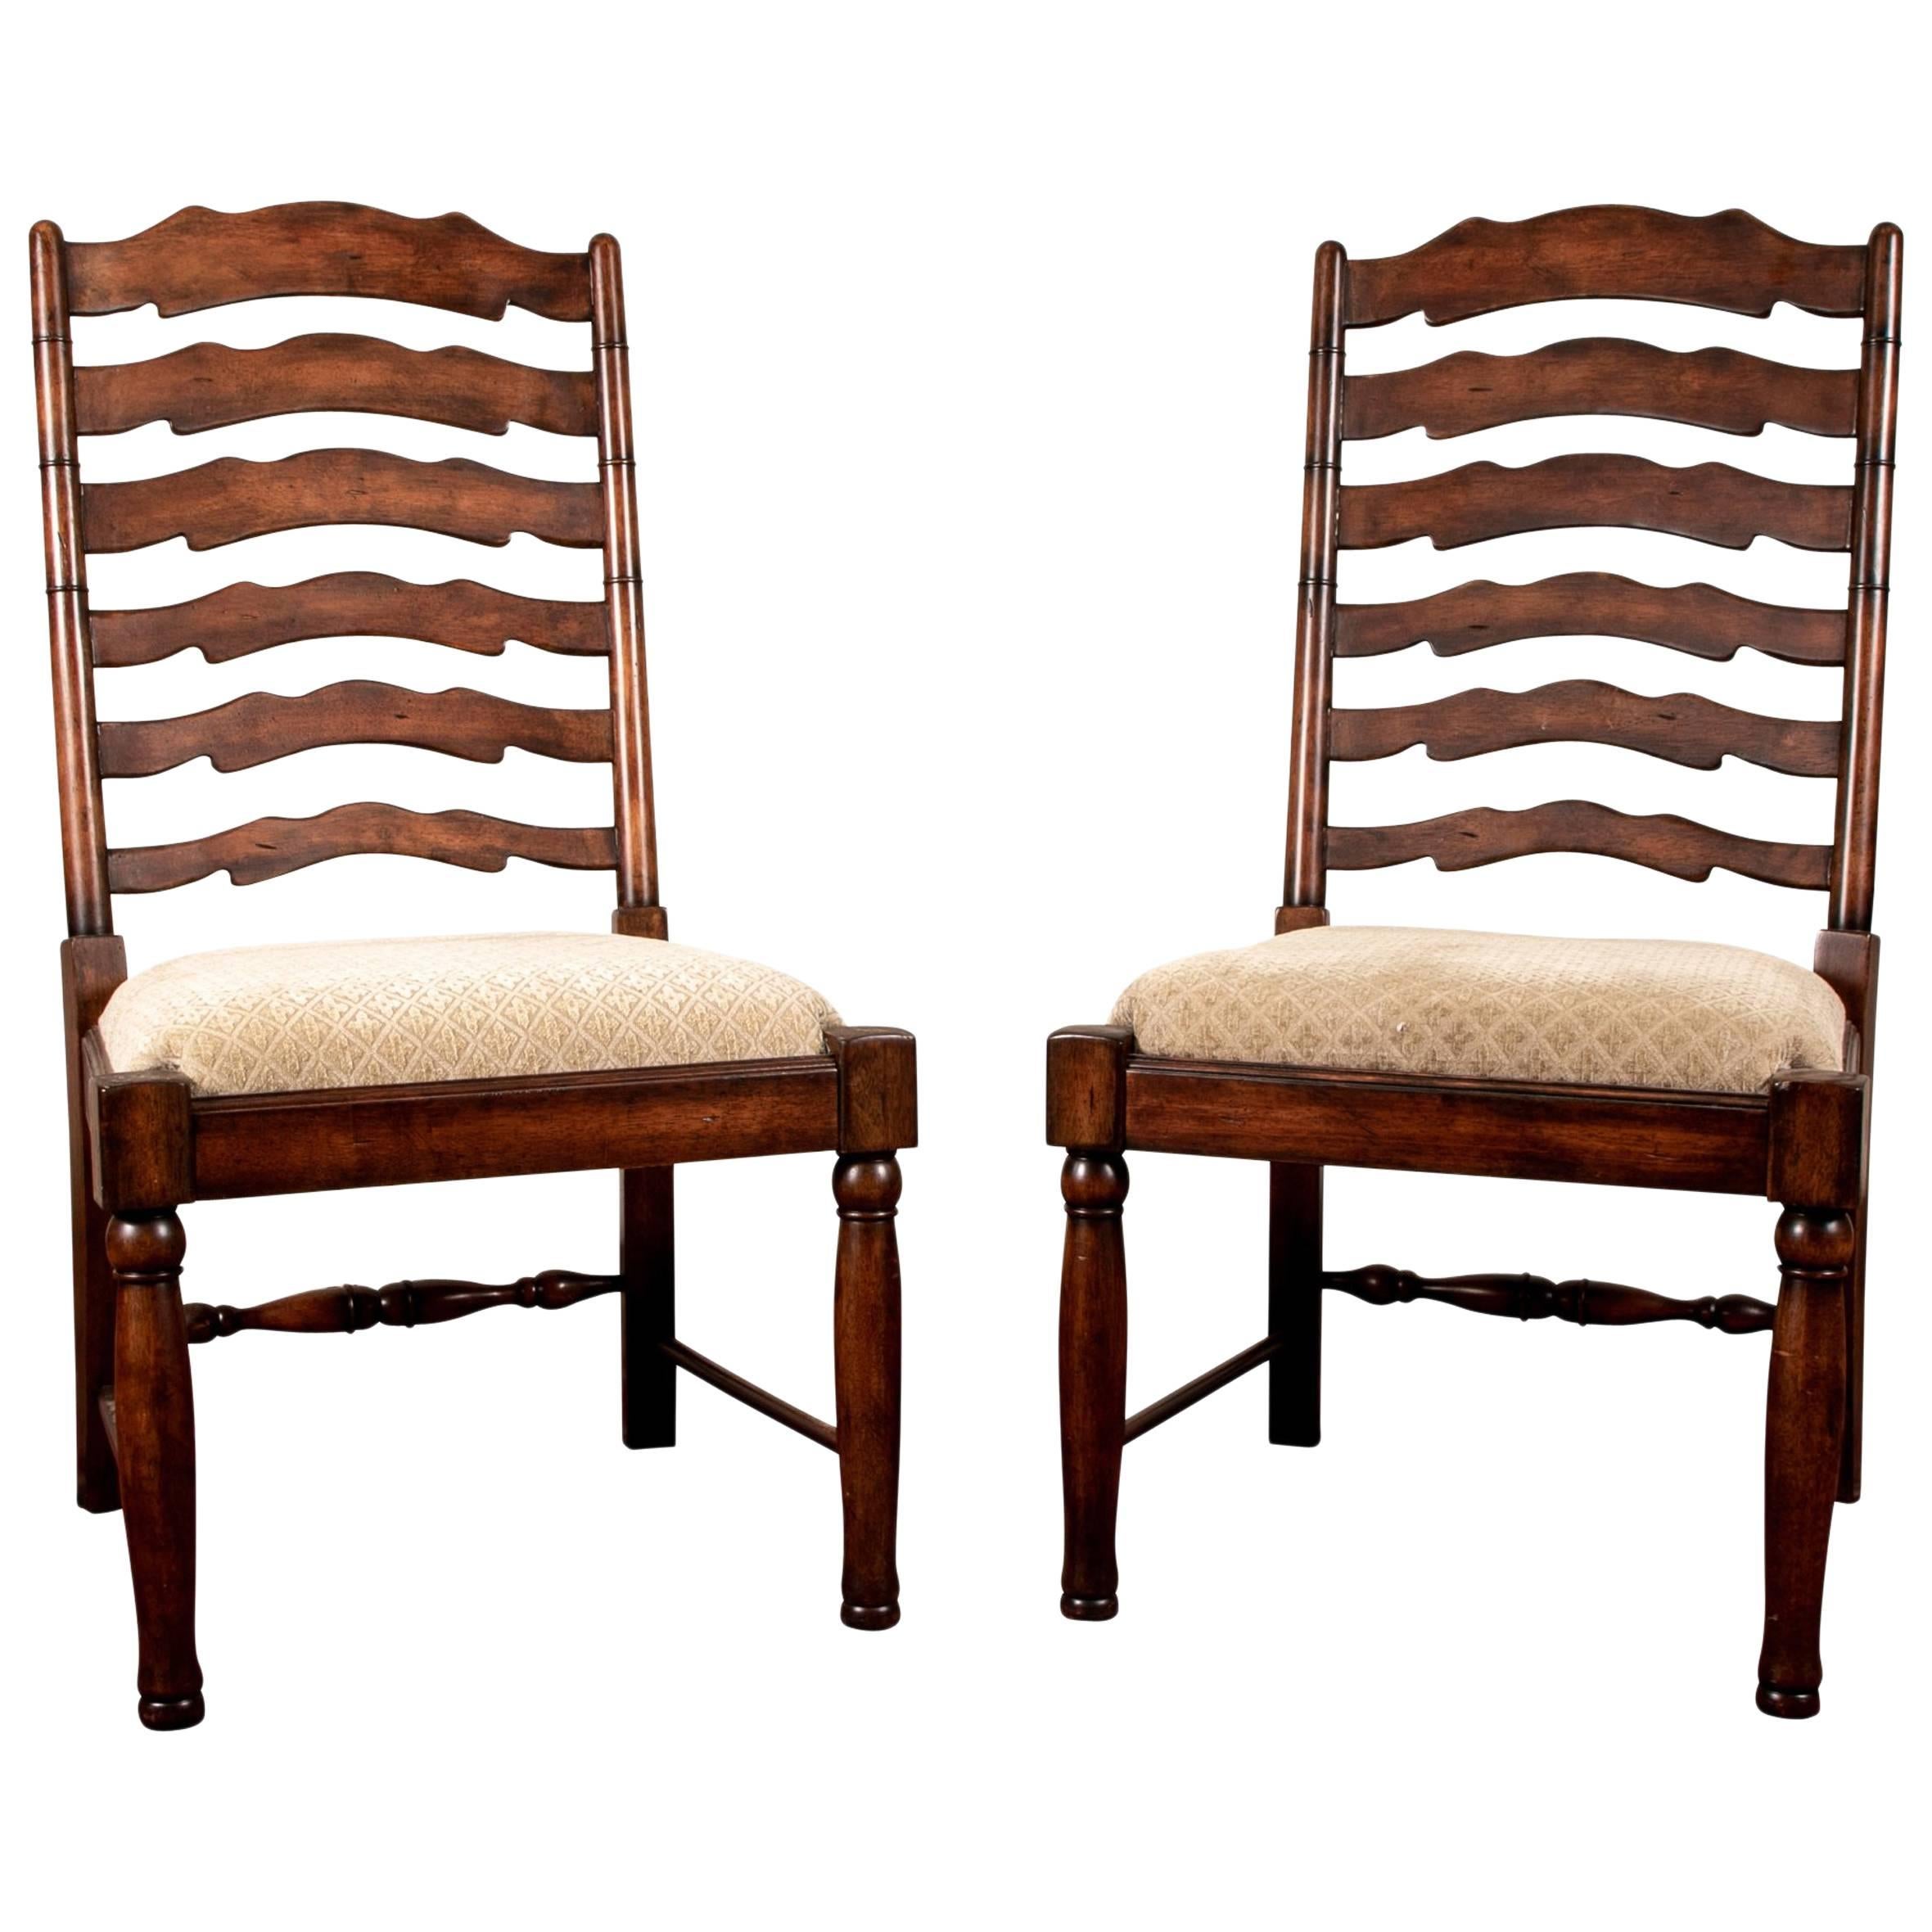 Pair of Mahogany Ladder Back Chairs